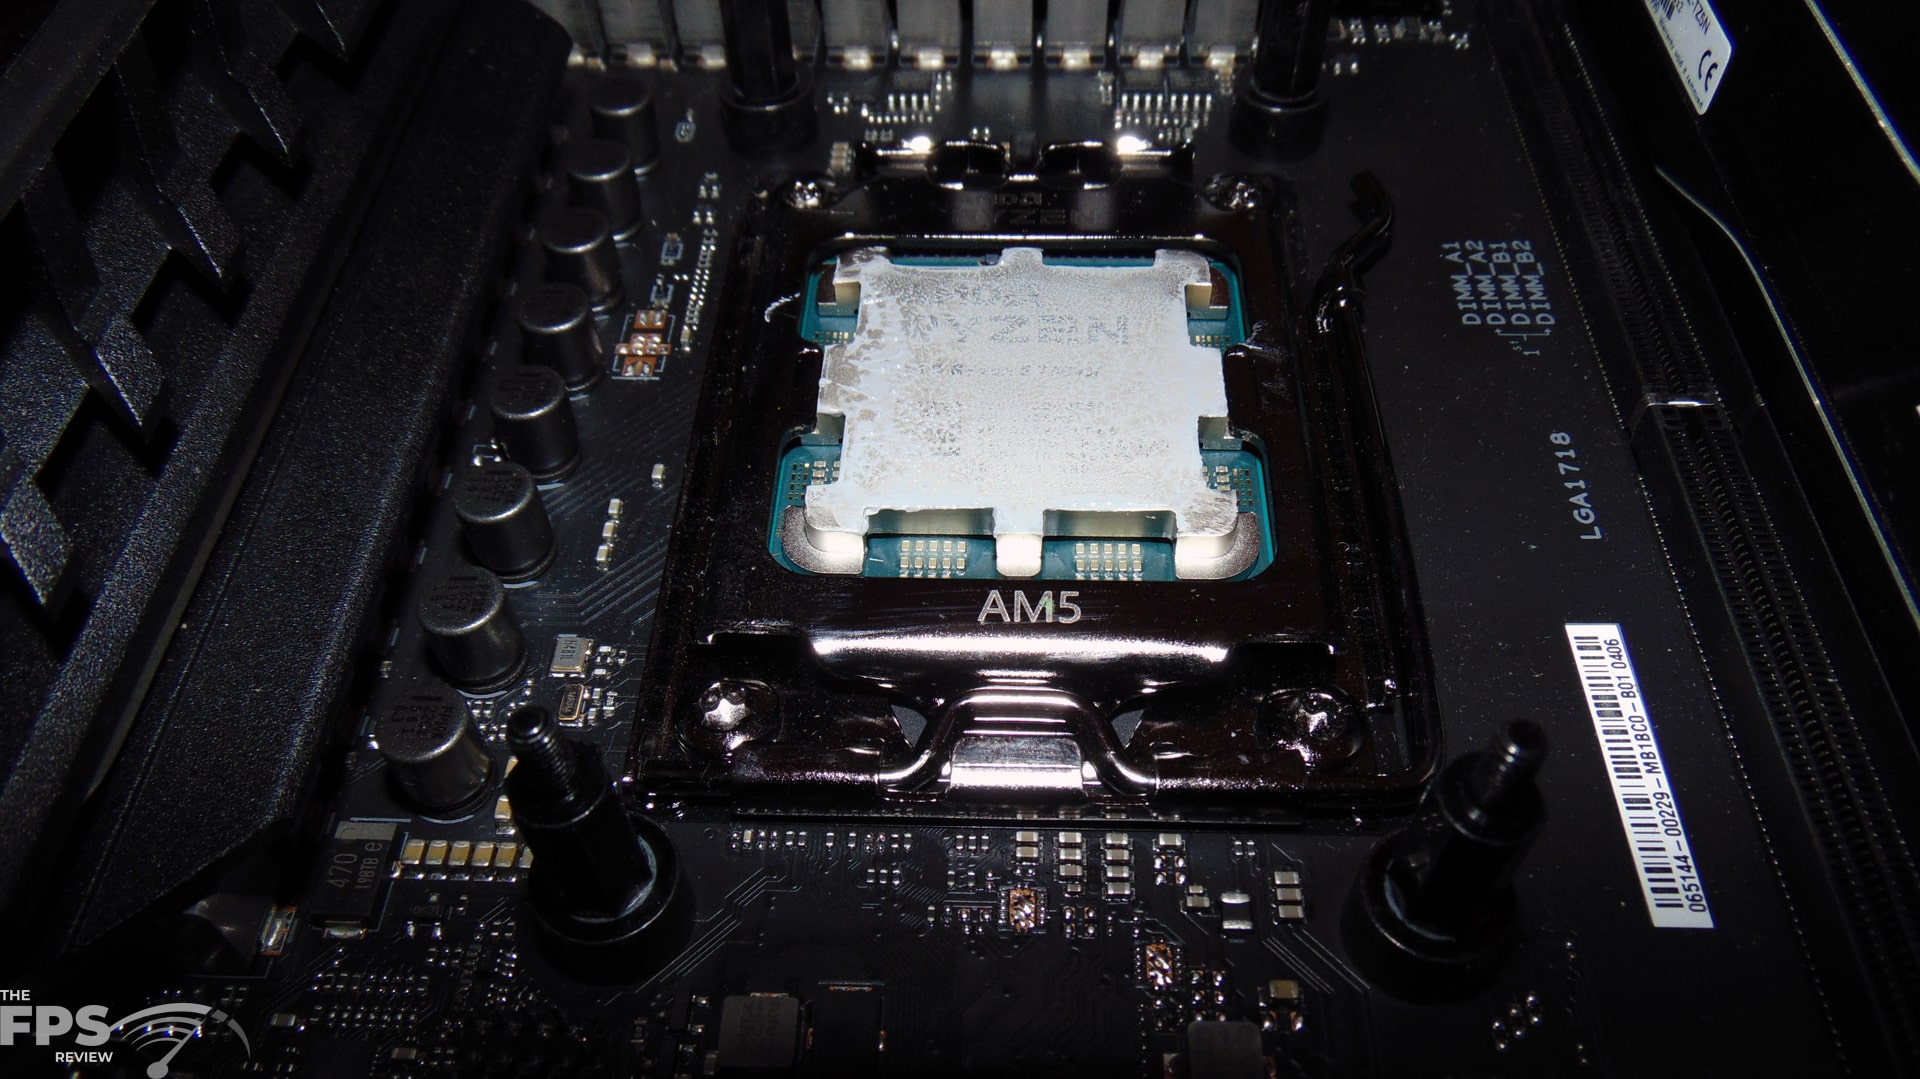 AMD Ryzen 5 7600 processor review